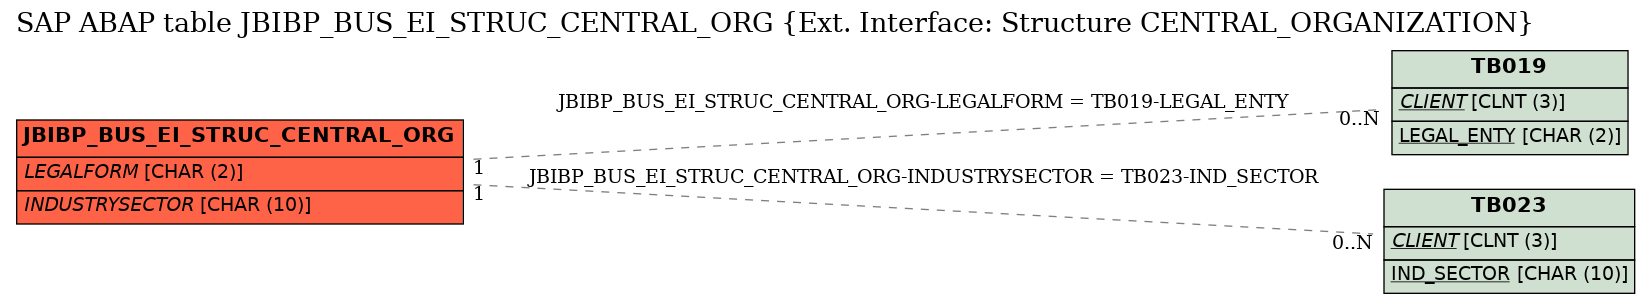 E-R Diagram for table JBIBP_BUS_EI_STRUC_CENTRAL_ORG (Ext. Interface: Structure CENTRAL_ORGANIZATION)